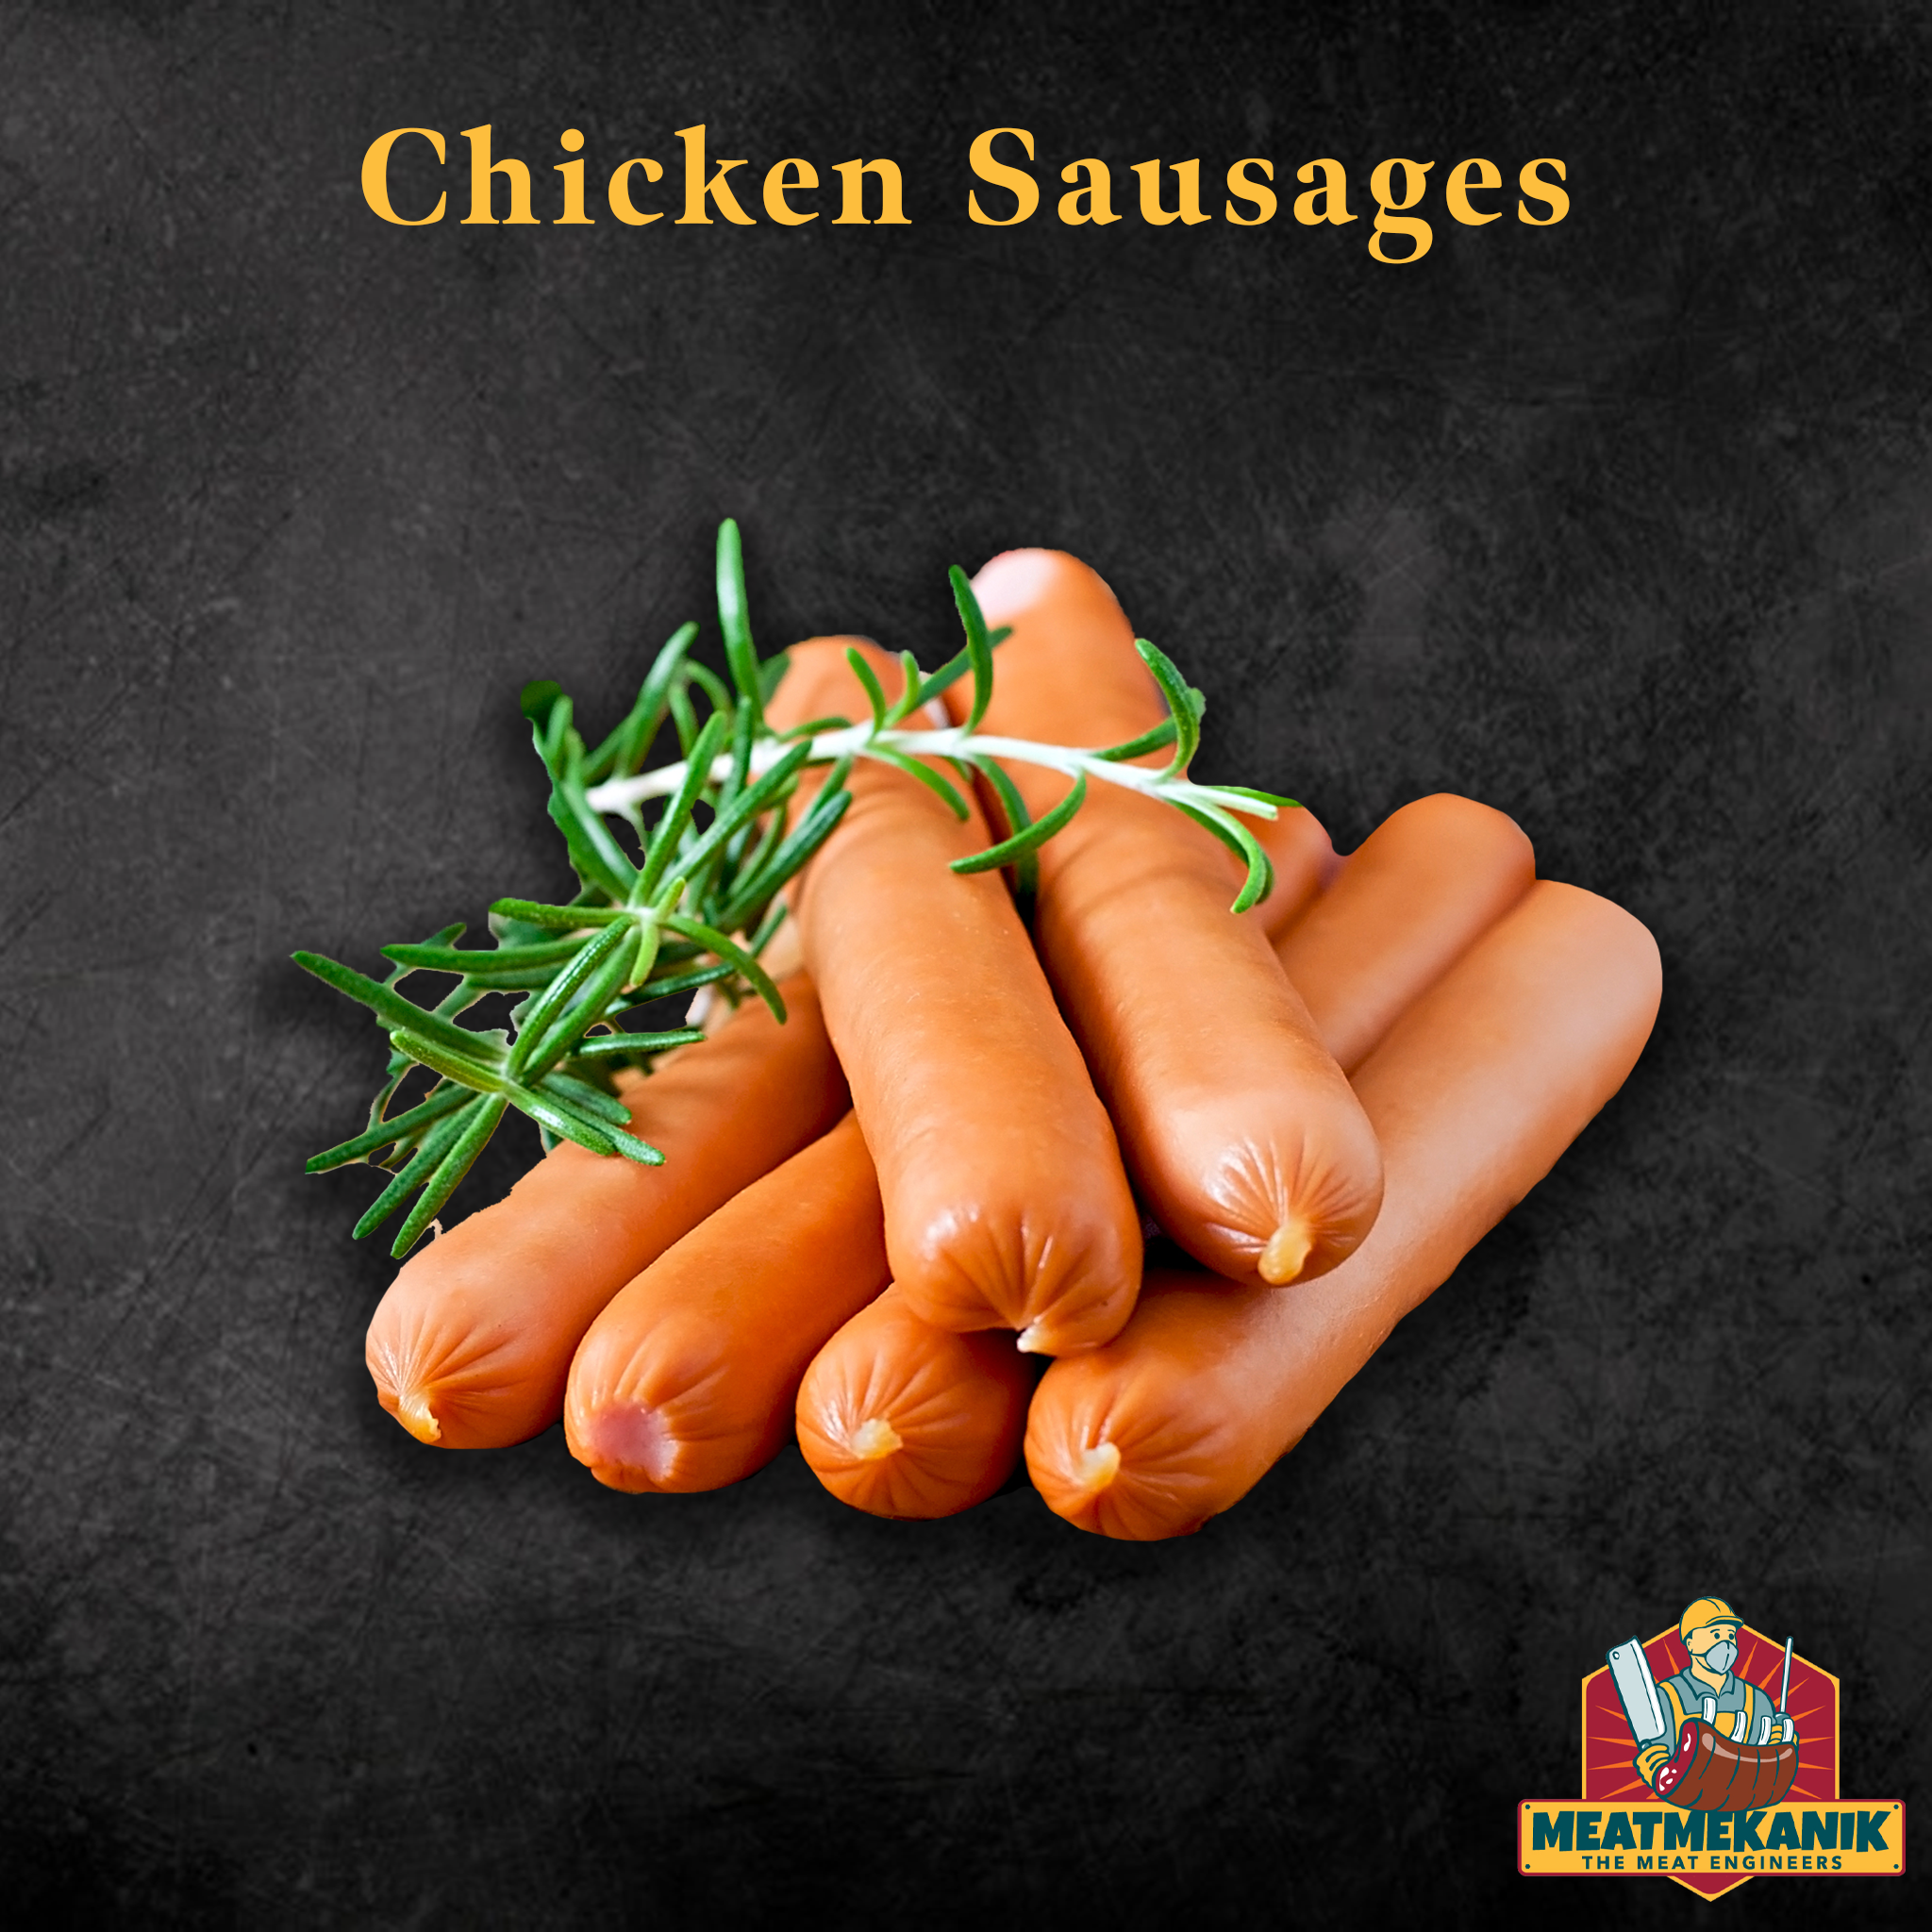 Chicken Sausage - Meat Mekanik